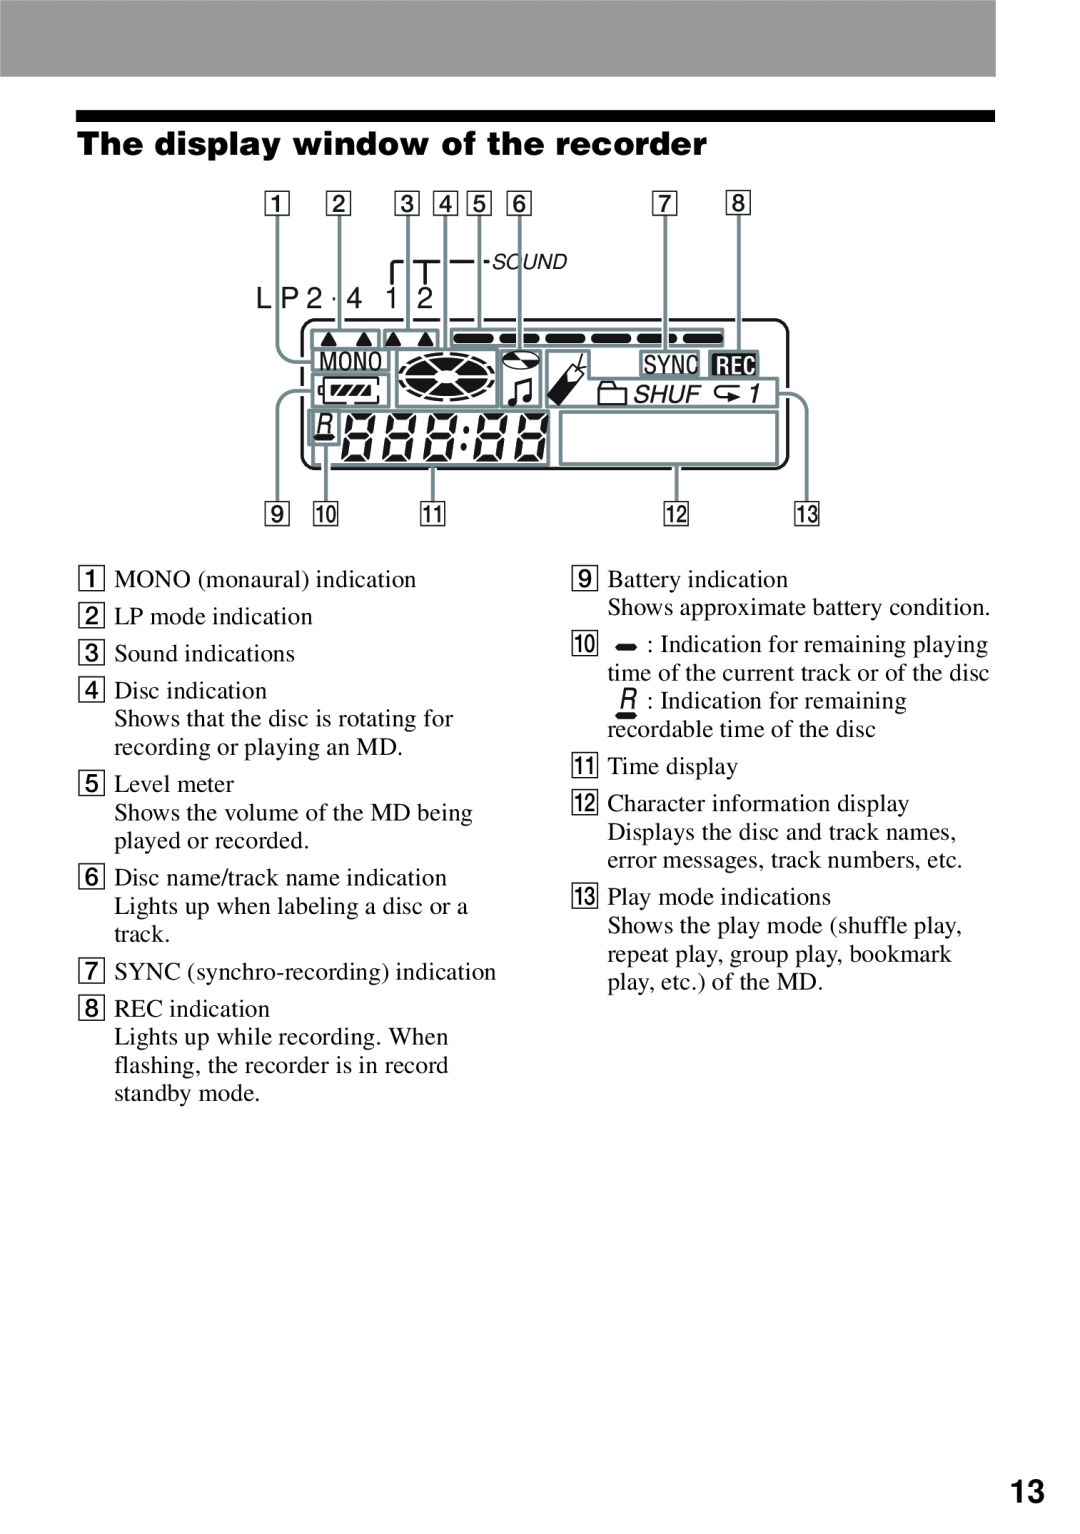 Sony MZ-N510 operating instructions The display window of the recorder, L P 2 . 4, 3 4 5, 9 q; qa, qs qd 